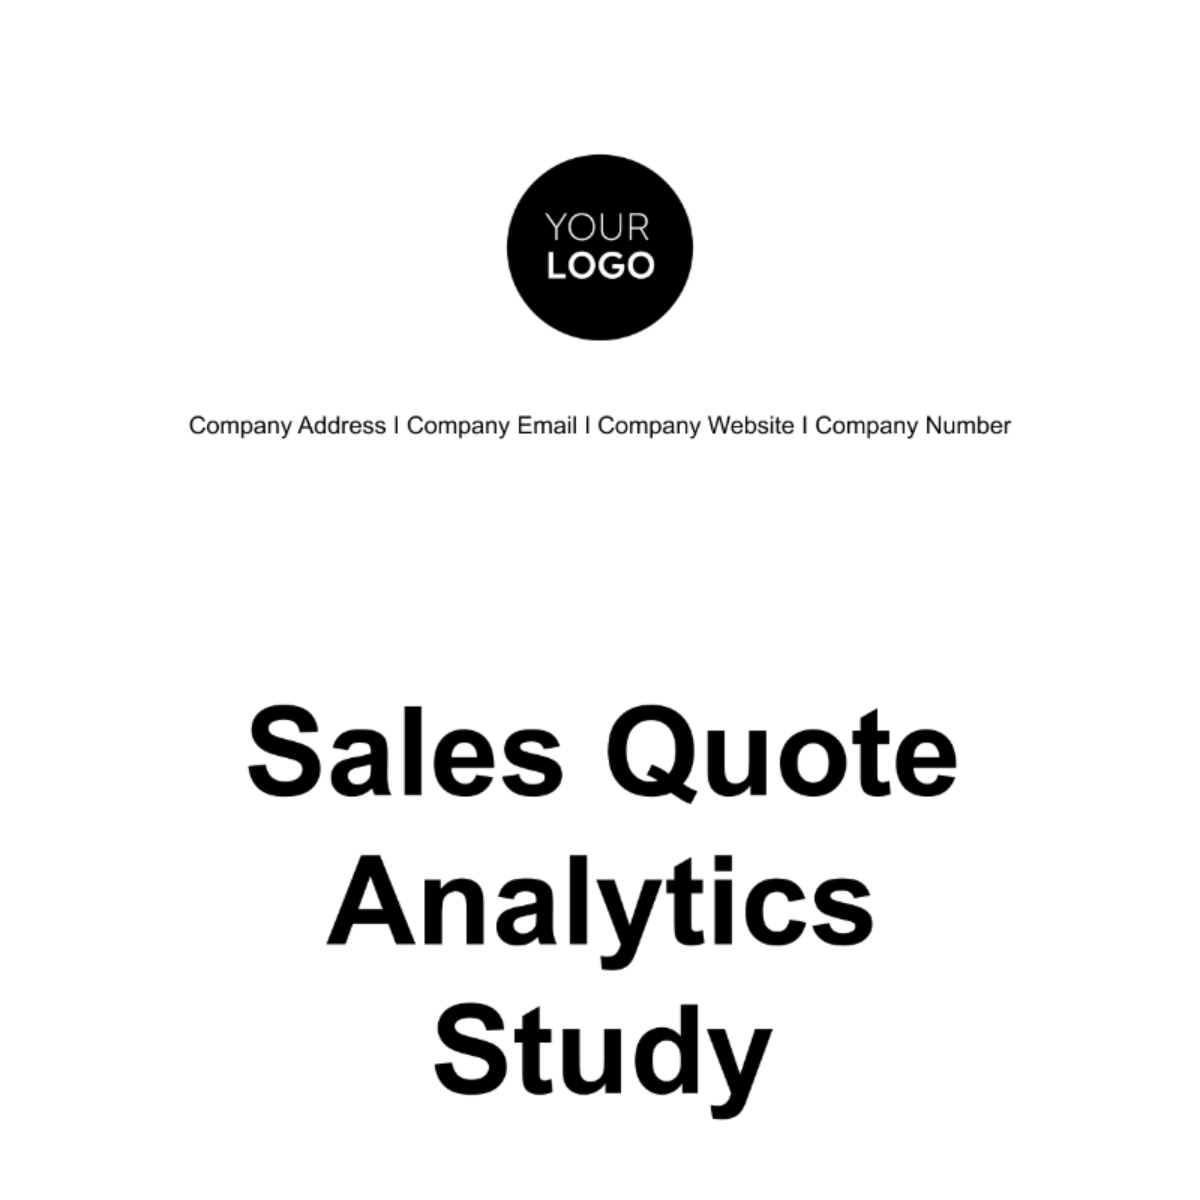 Free Sales Quote Analytics Study Template